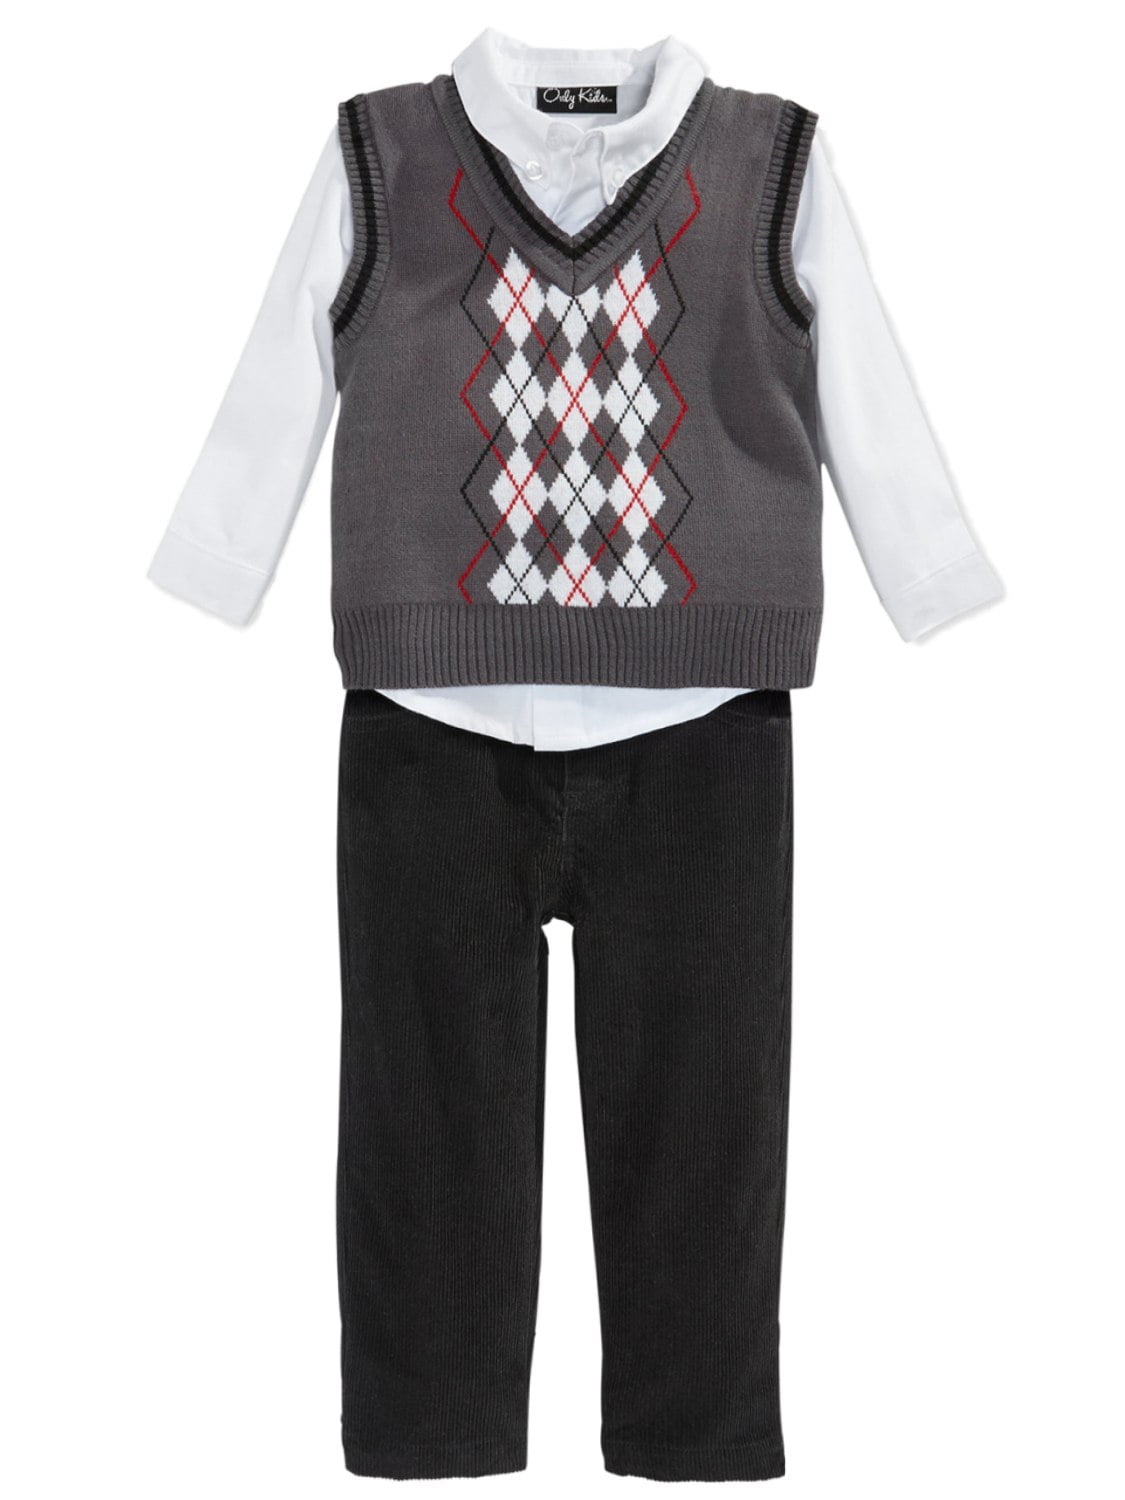 FREE Bday sale Gray Formal Sweater 2T Boy, Babies & Kids, Babies